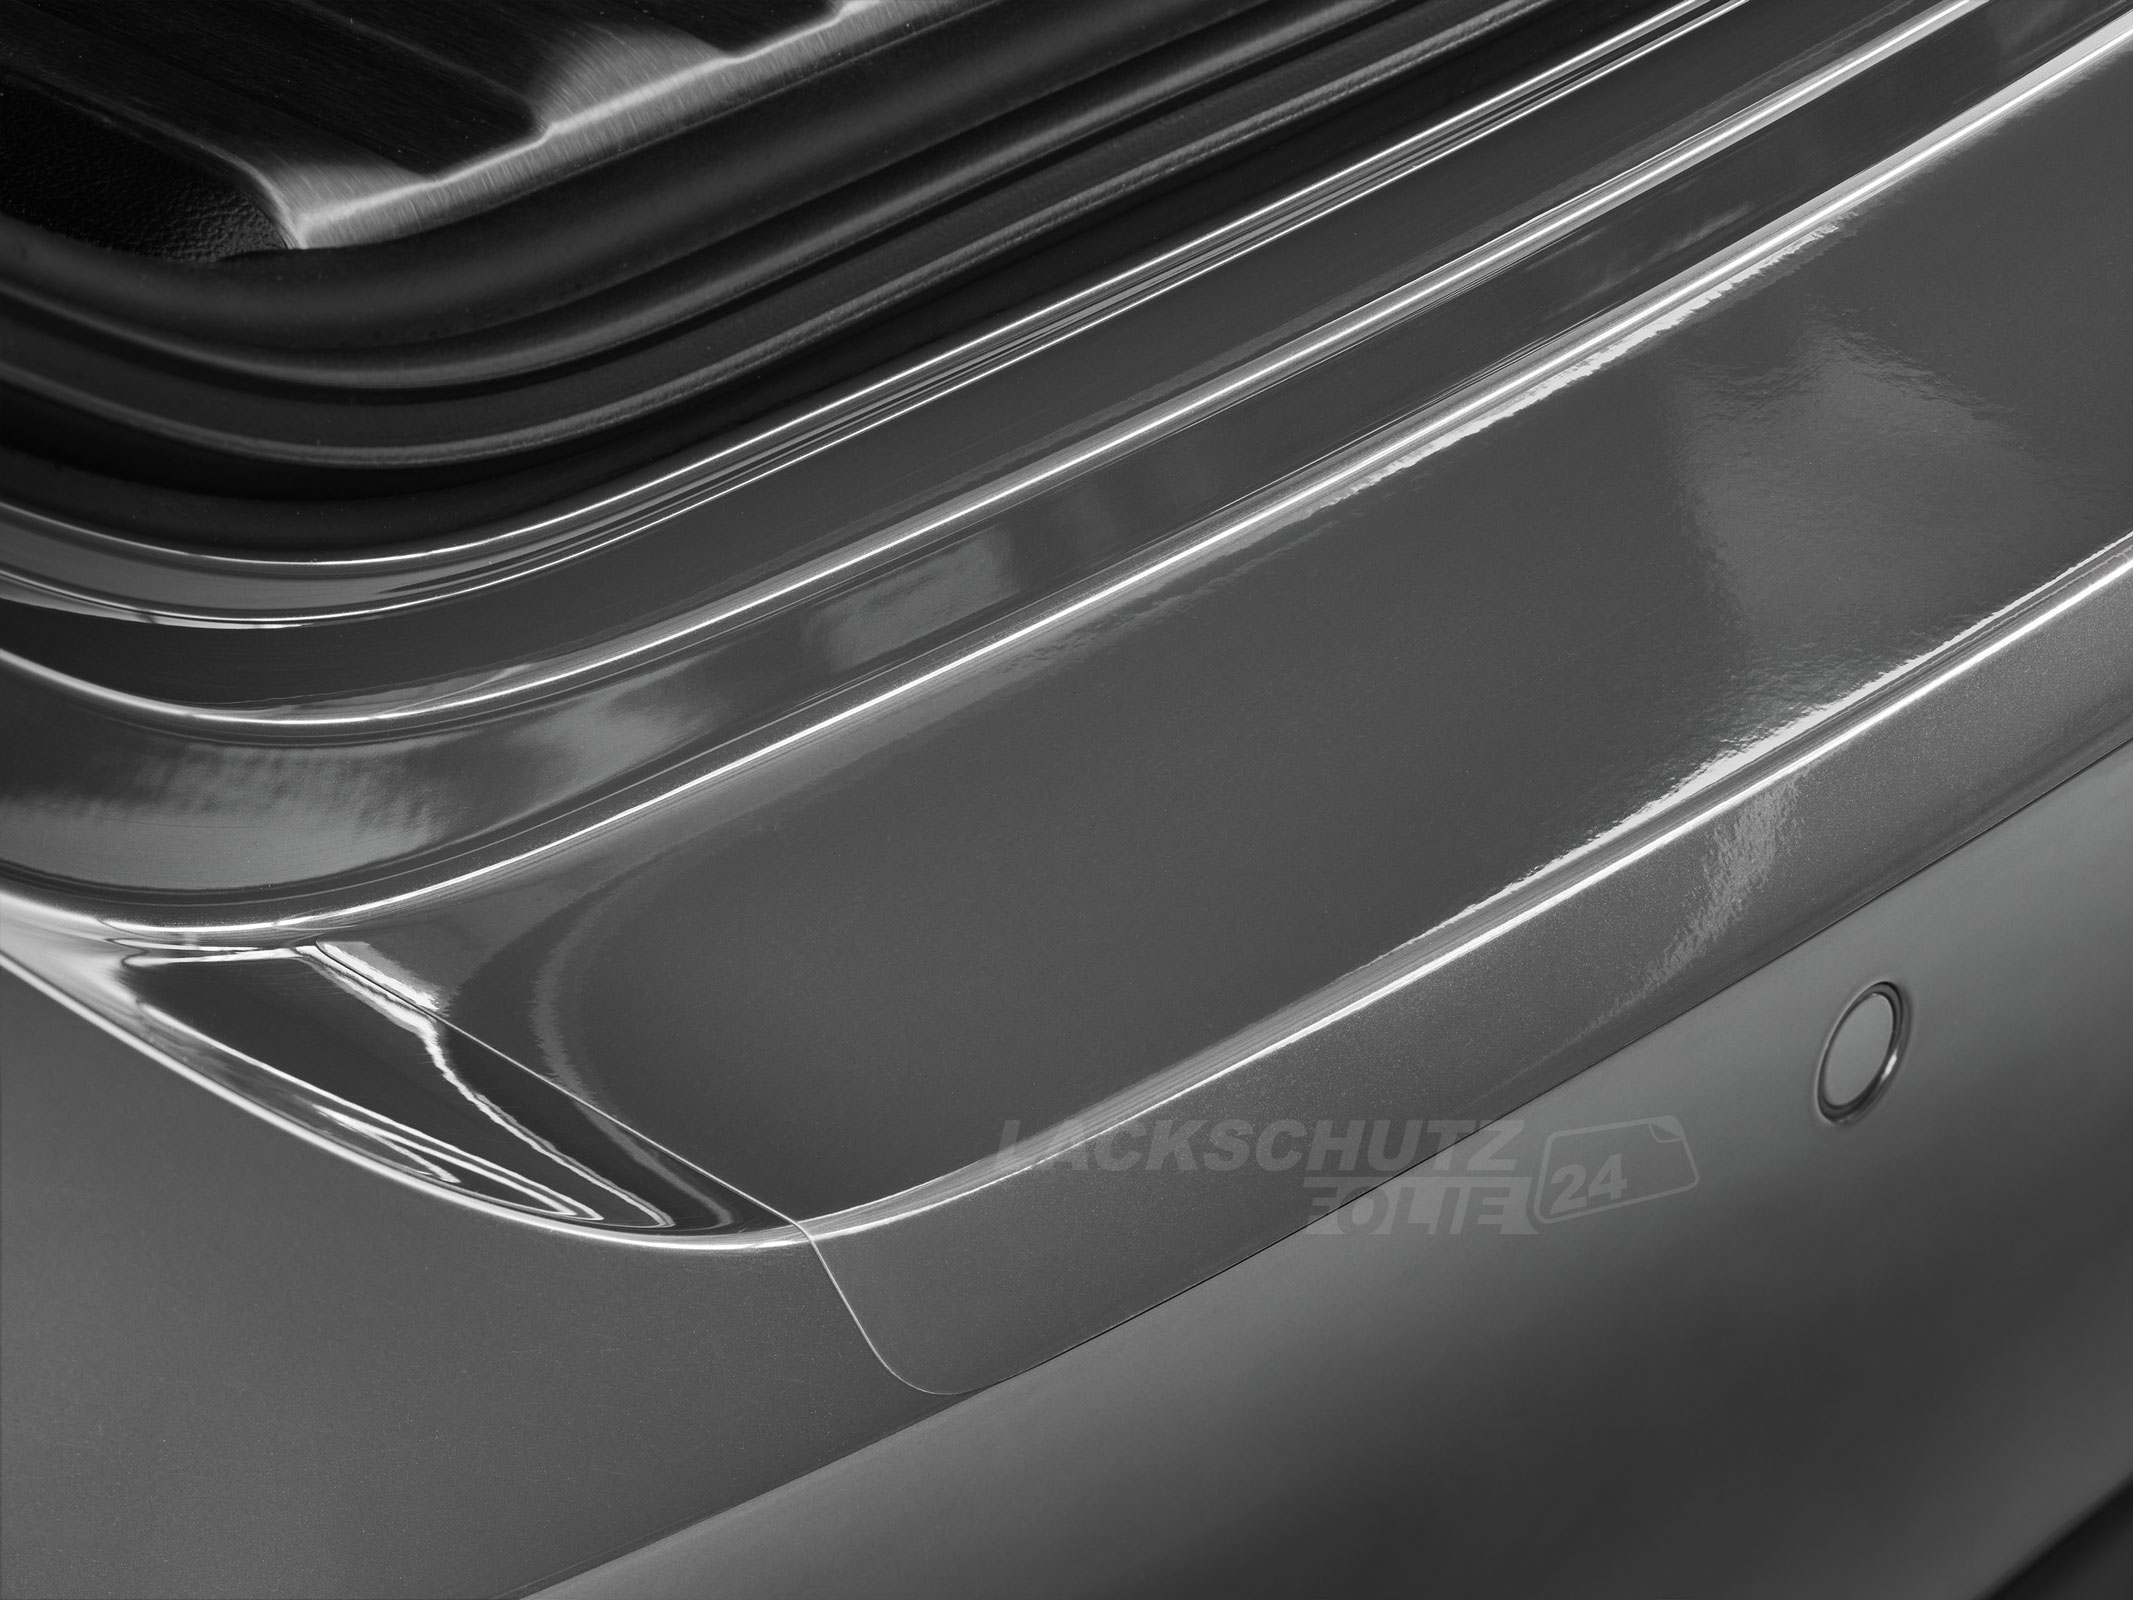 Ladekantenschutzfolie - Transparent Glatt Hochglänzend 240 µm stark für BMW 5er Touring (Kombi) Typ E39, BJ 1998-2004